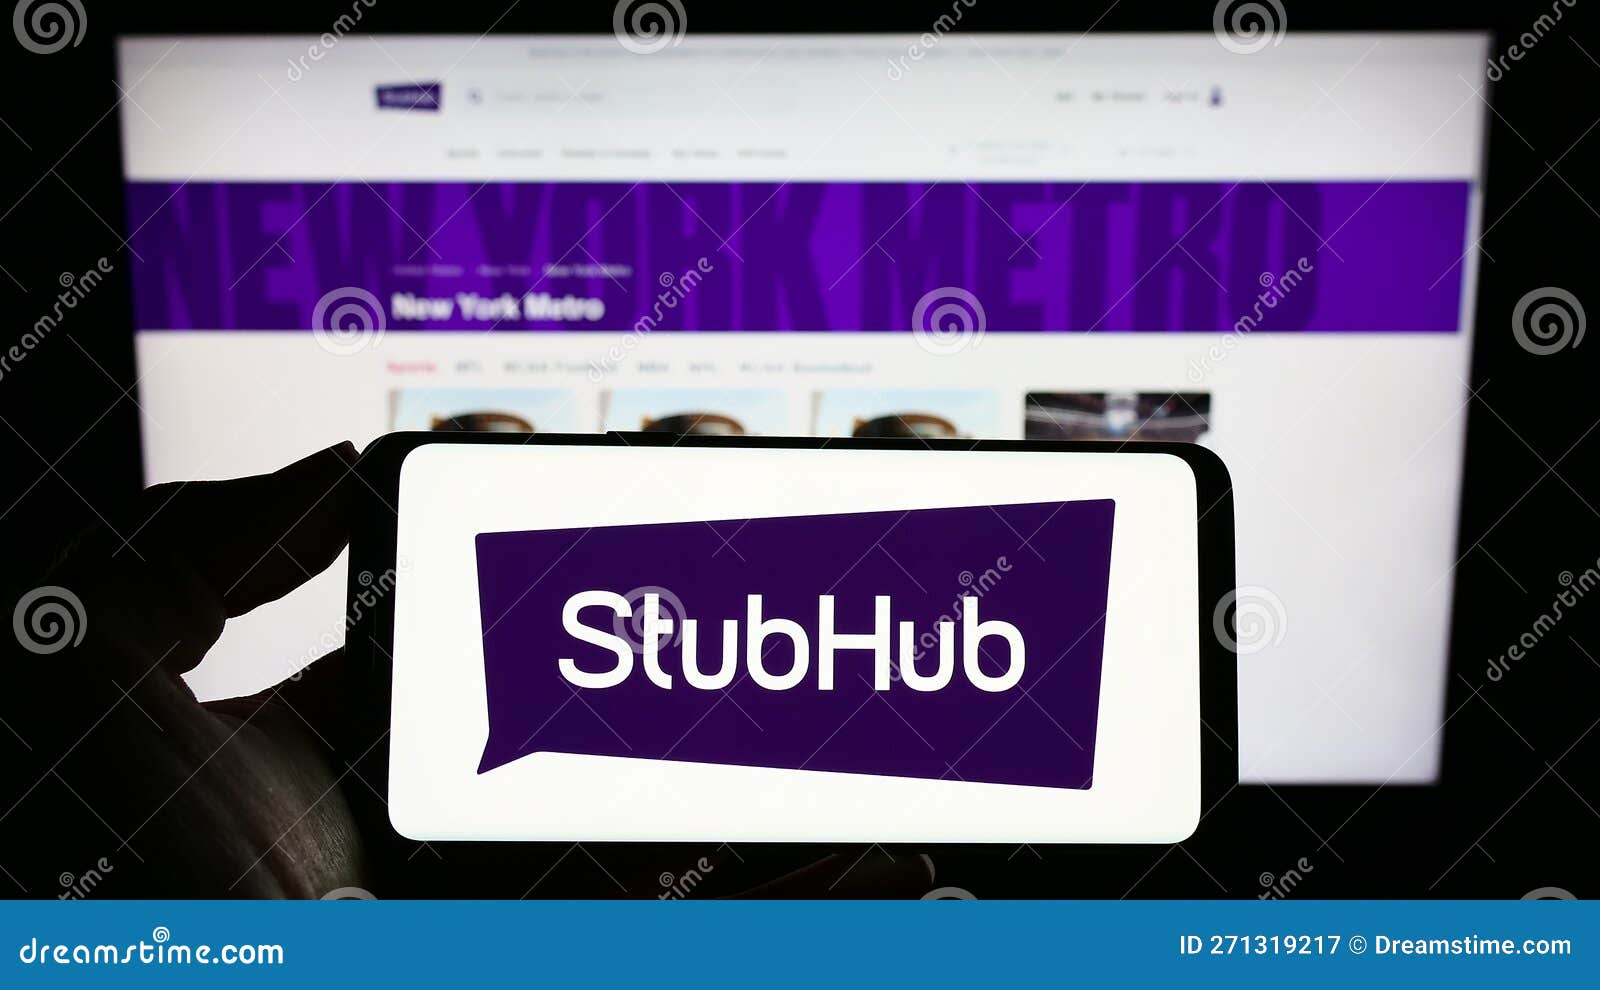 StubHub (@stubhub) • Instagram photos and videos